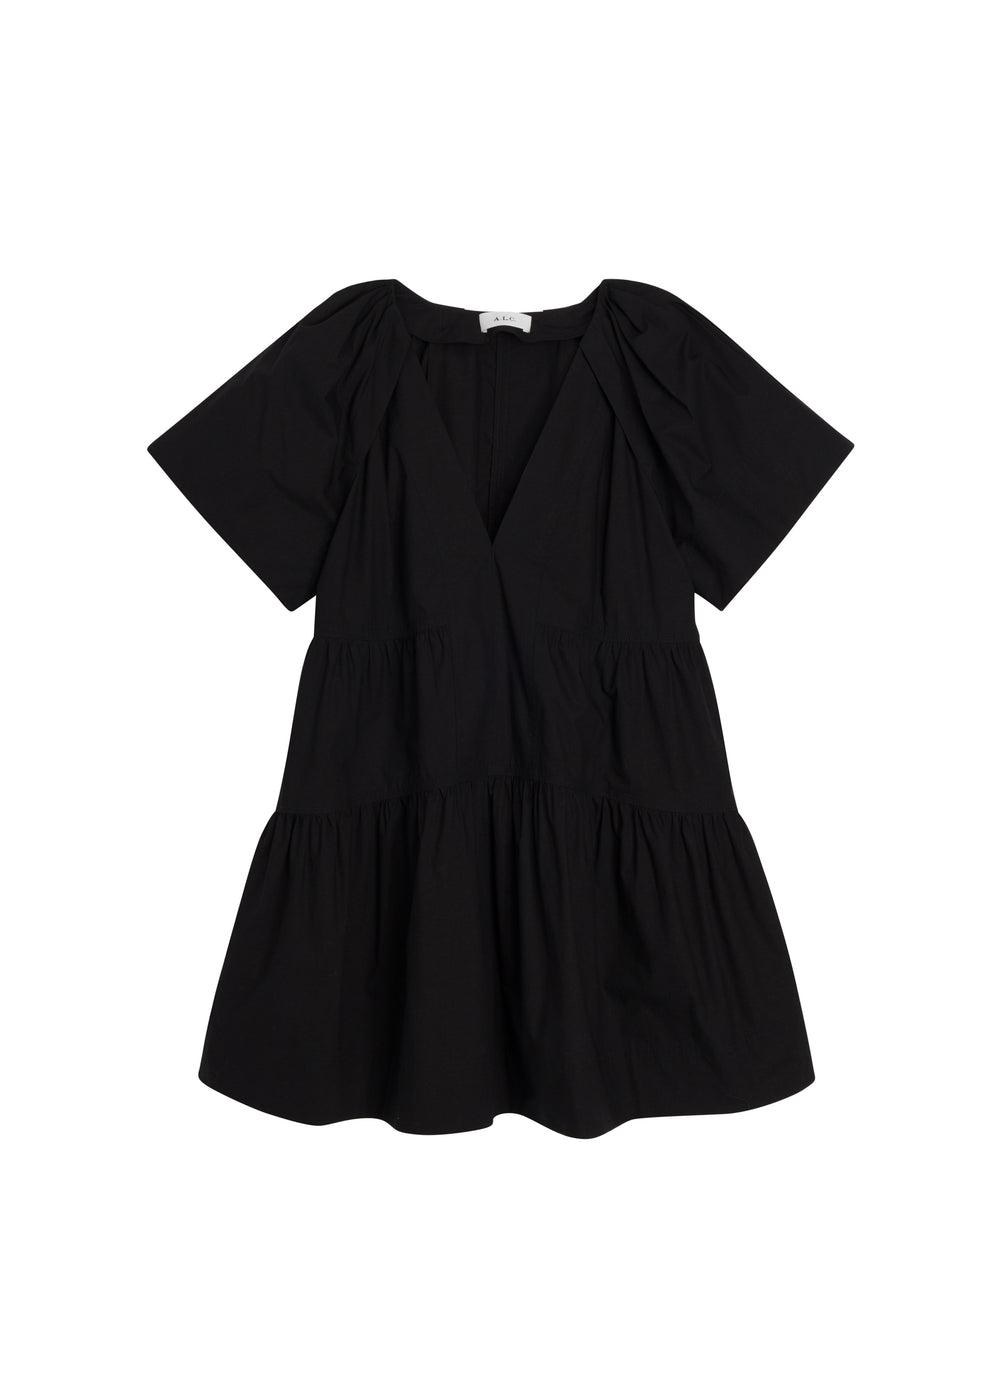 flatlay of black short sleeve mini dress